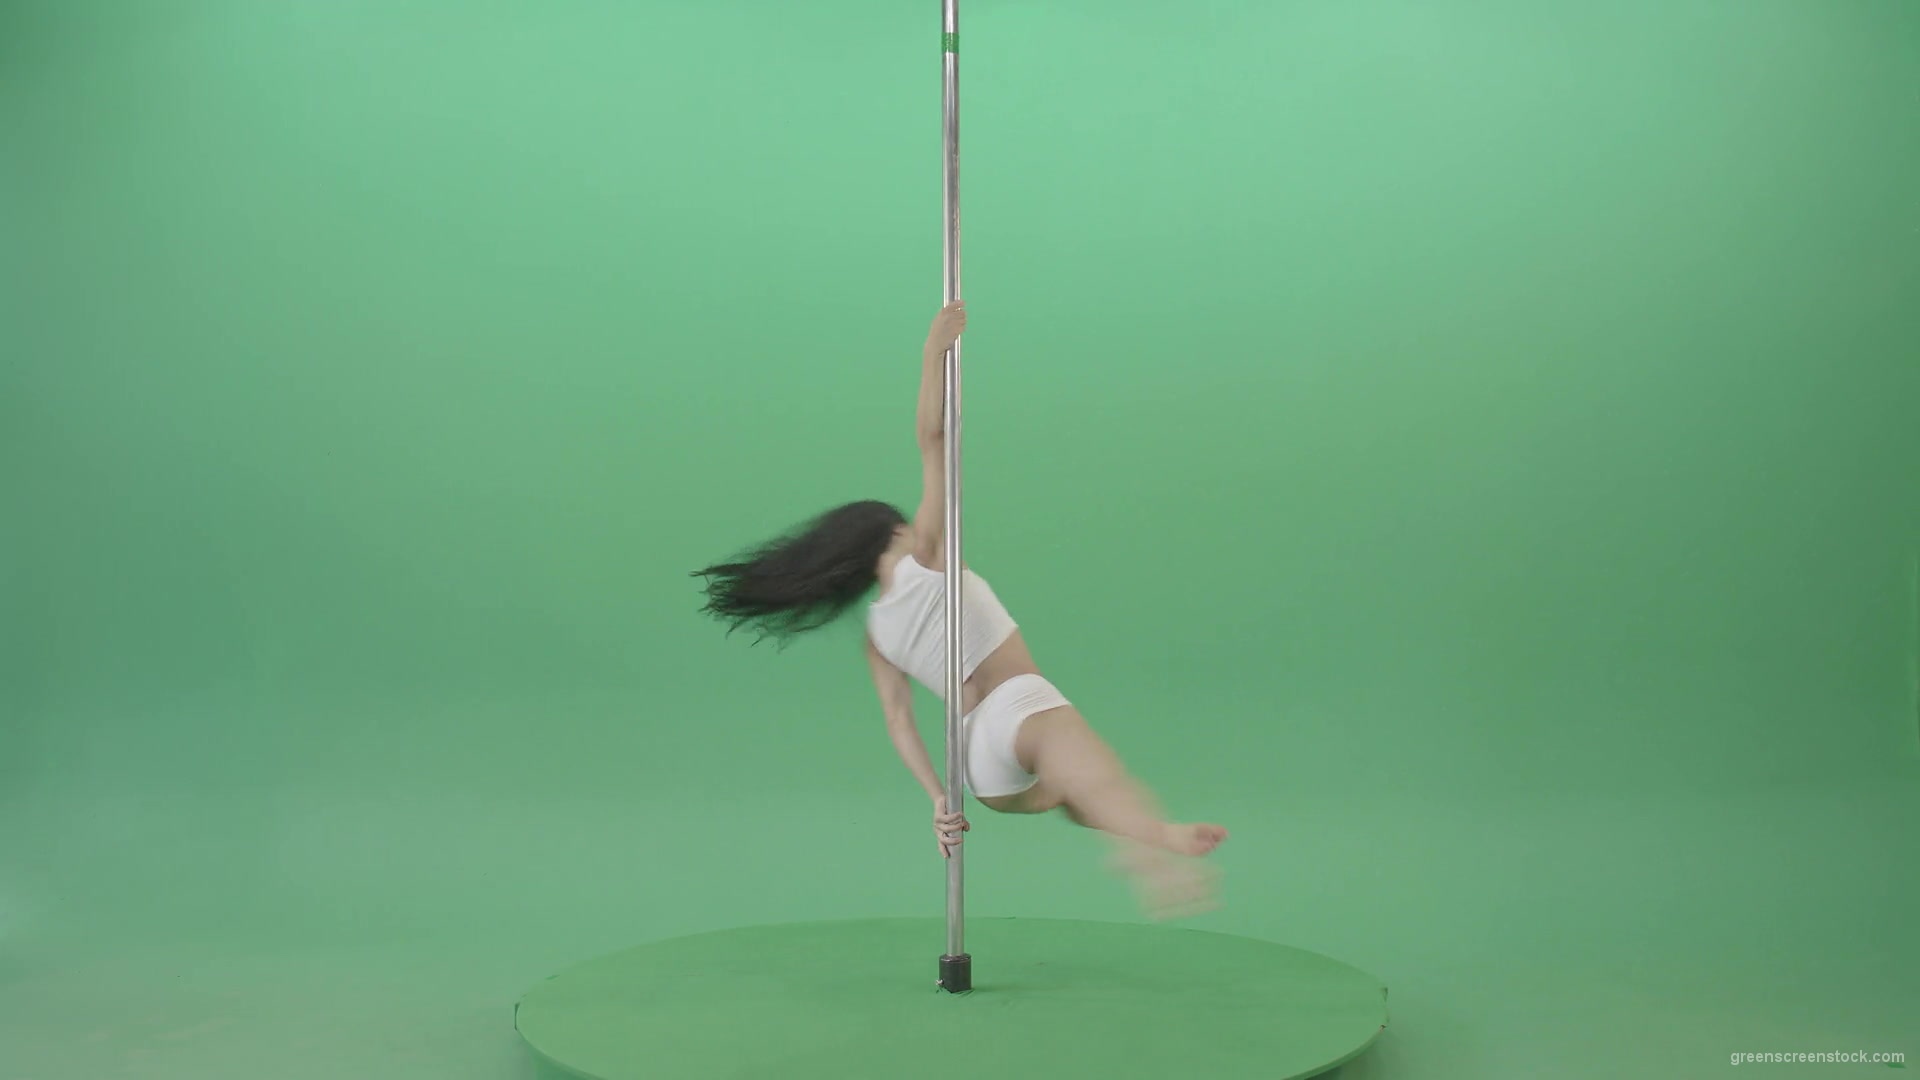 Acrobatic-gymnastics-making-spin-element-on-Pole-Pilon-on-green-screen-4K-Video-Footage-1920_005 Green Screen Stock